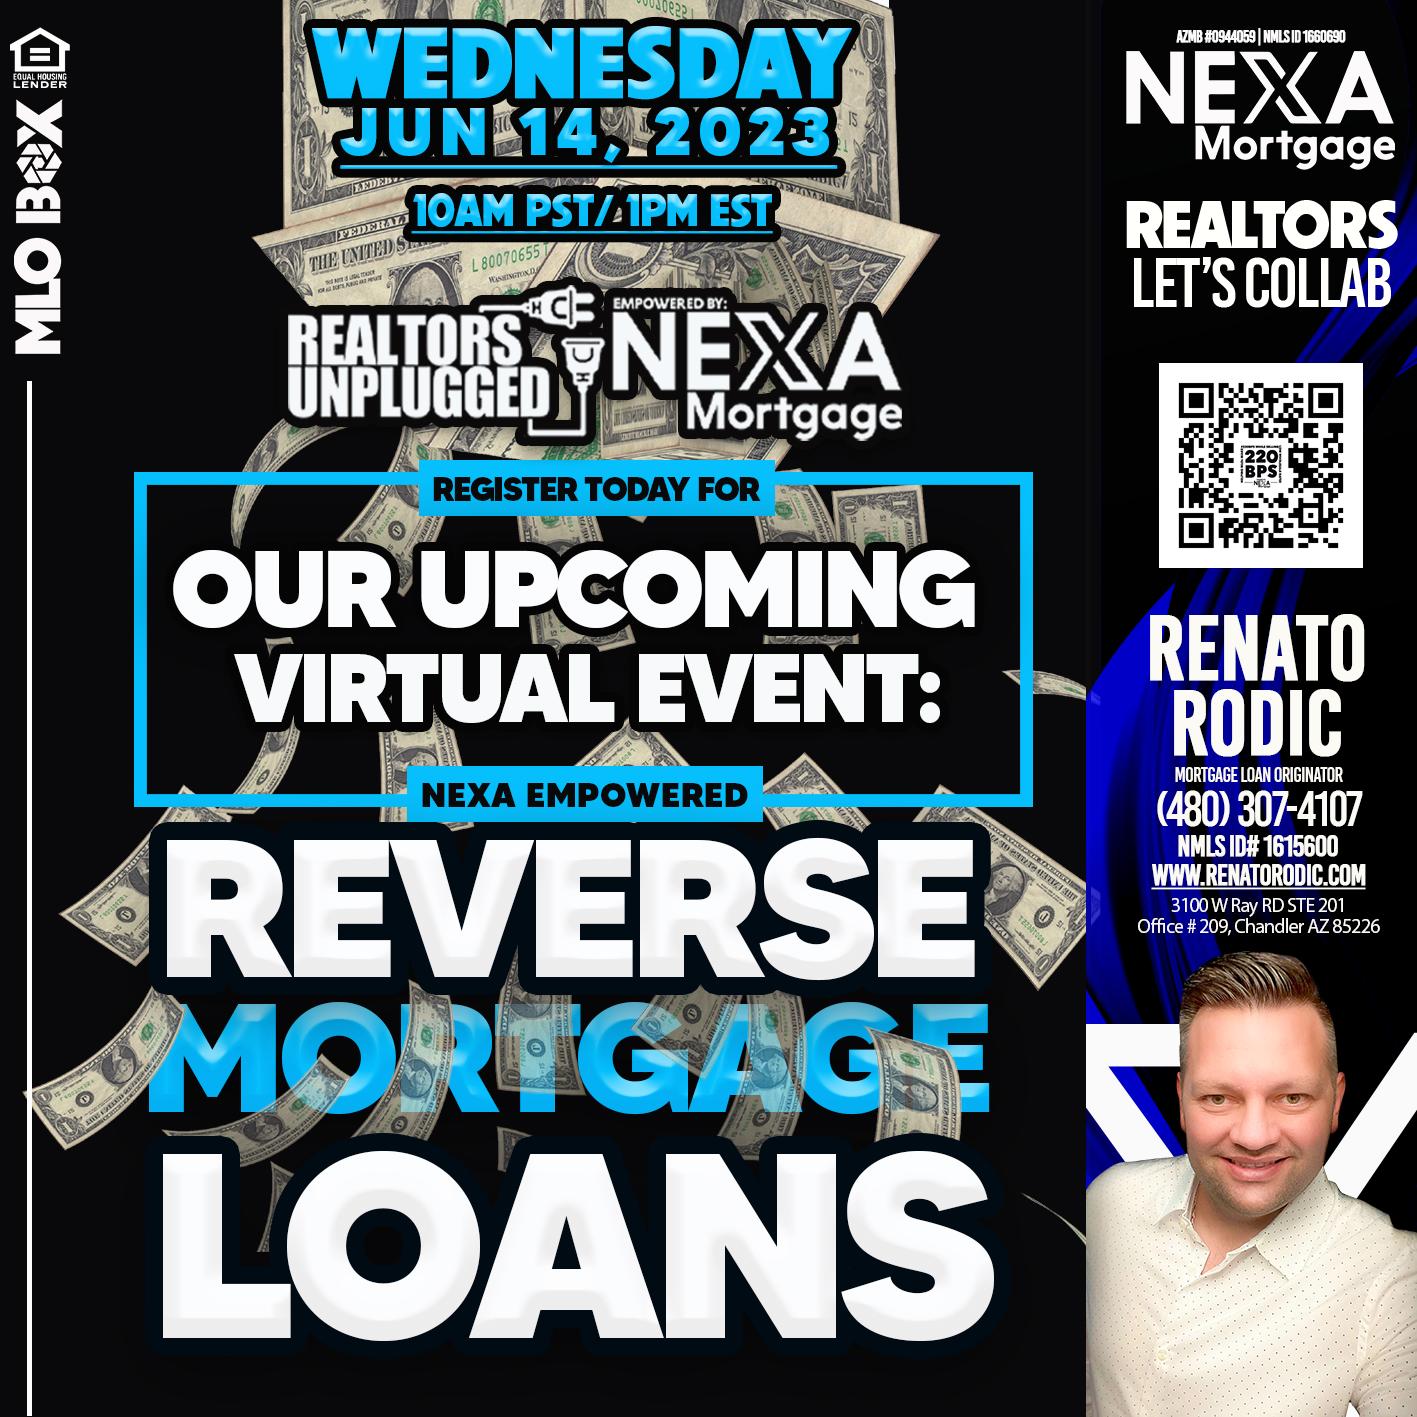 REALTOS LETS COLLAB - Renato Rodic -Mortgage Loan Originator